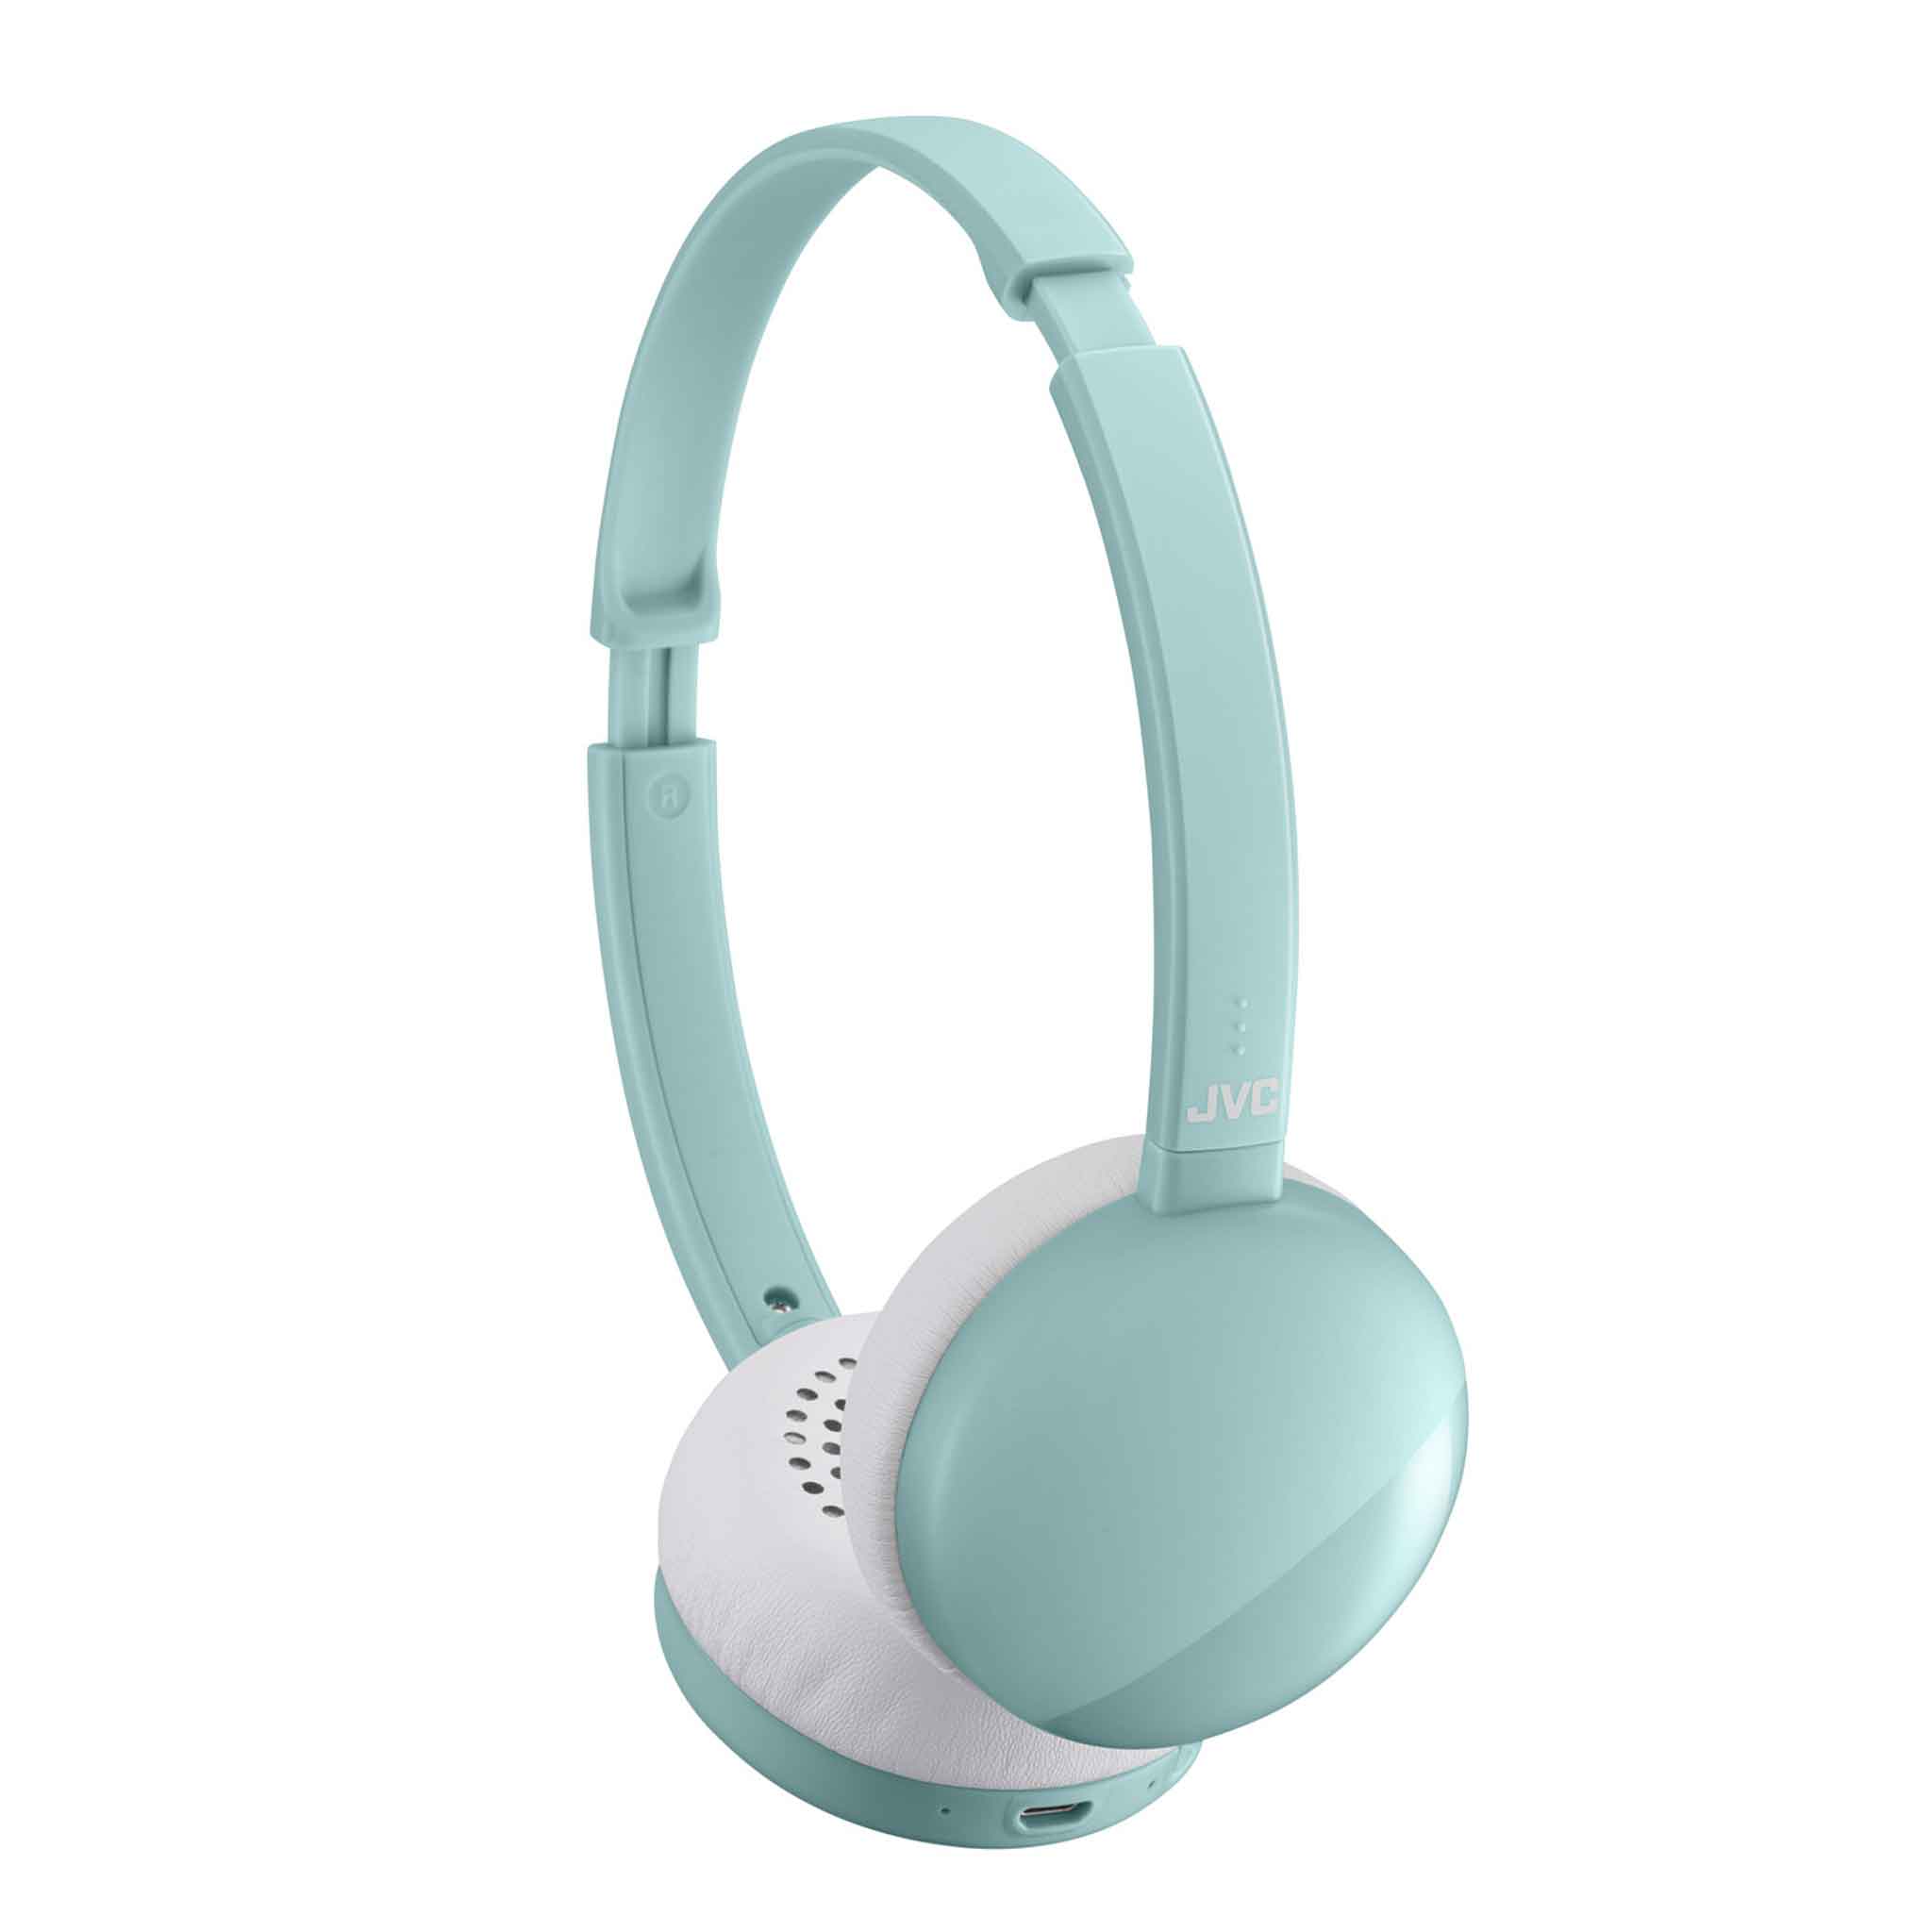 JVC HA-S22W in Mint Green Bluetooth Headphones